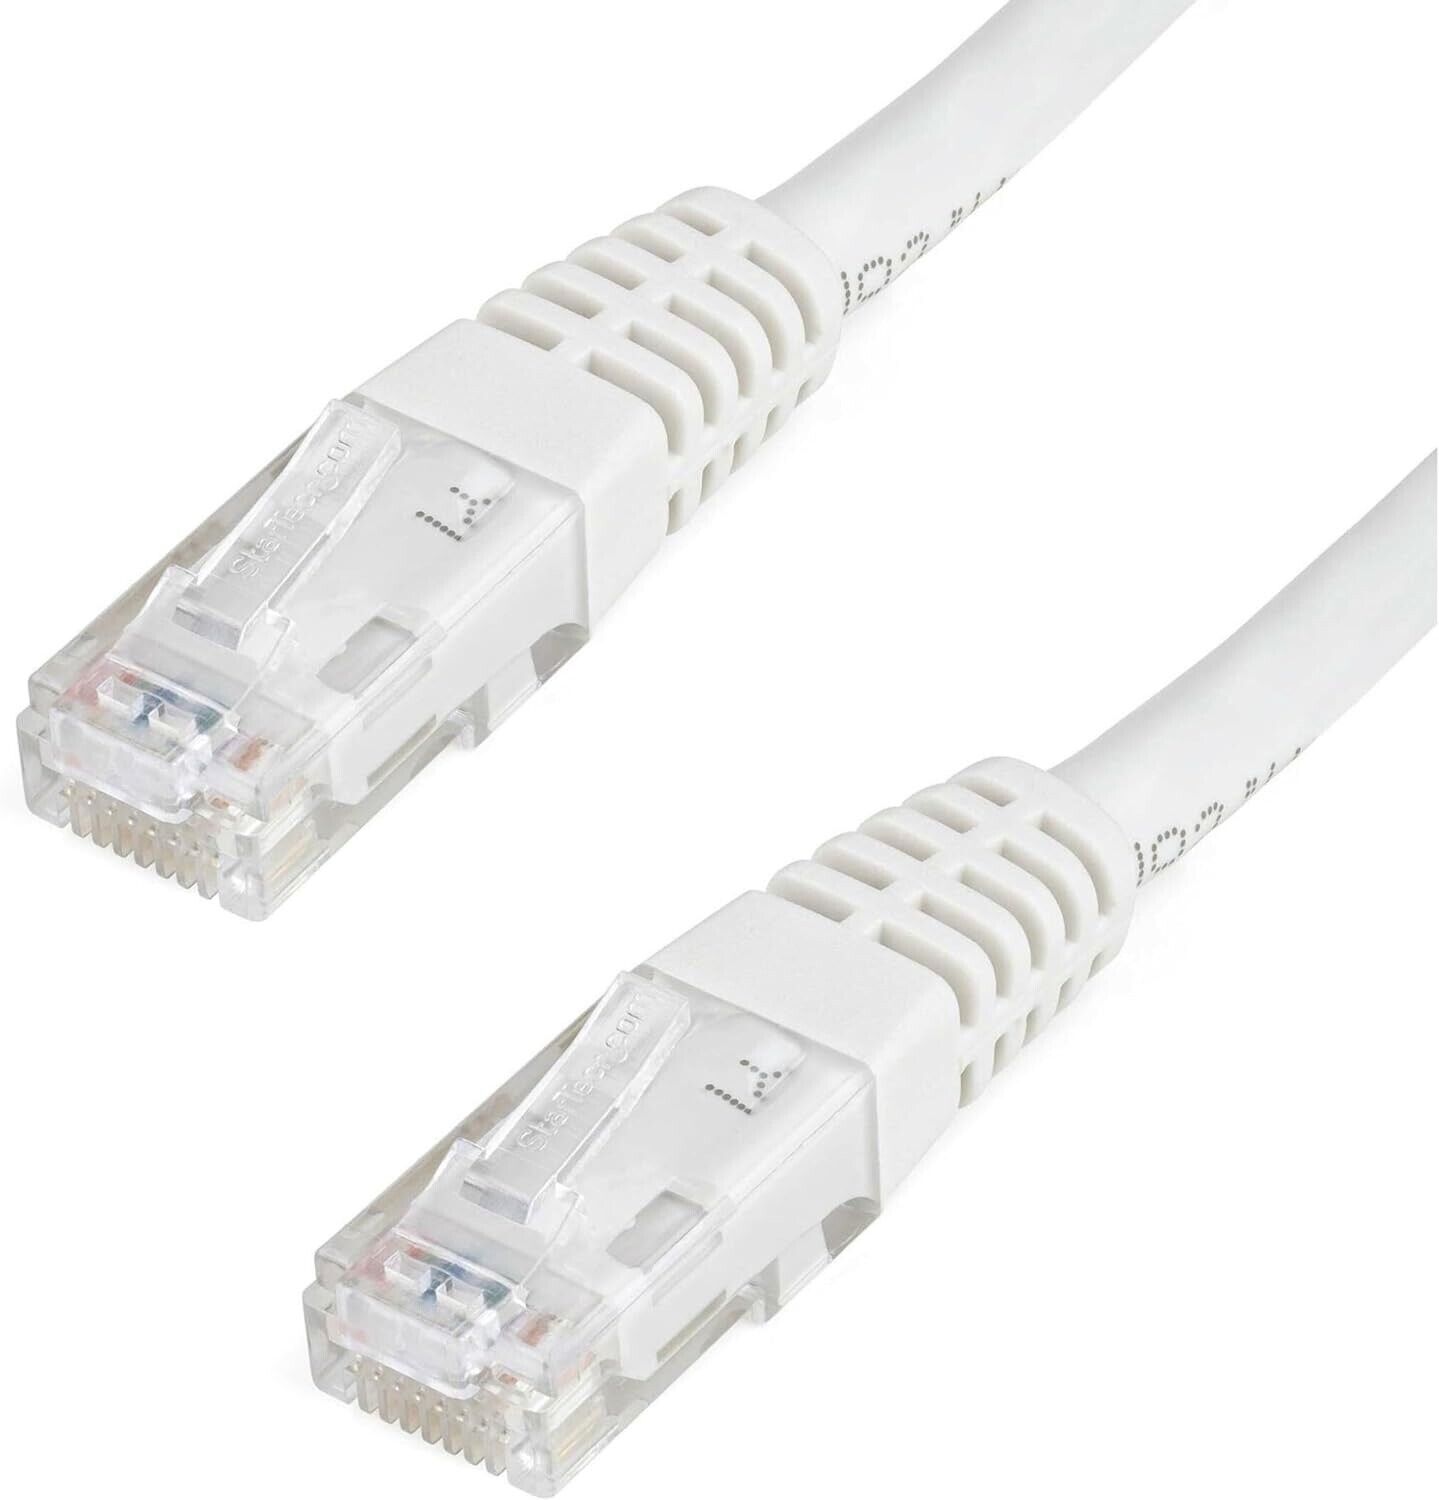 StarTech.com 6ft CAT6 Ethernet Cable - White CAT 6 Gigabit Ethernet Wire -650MHz